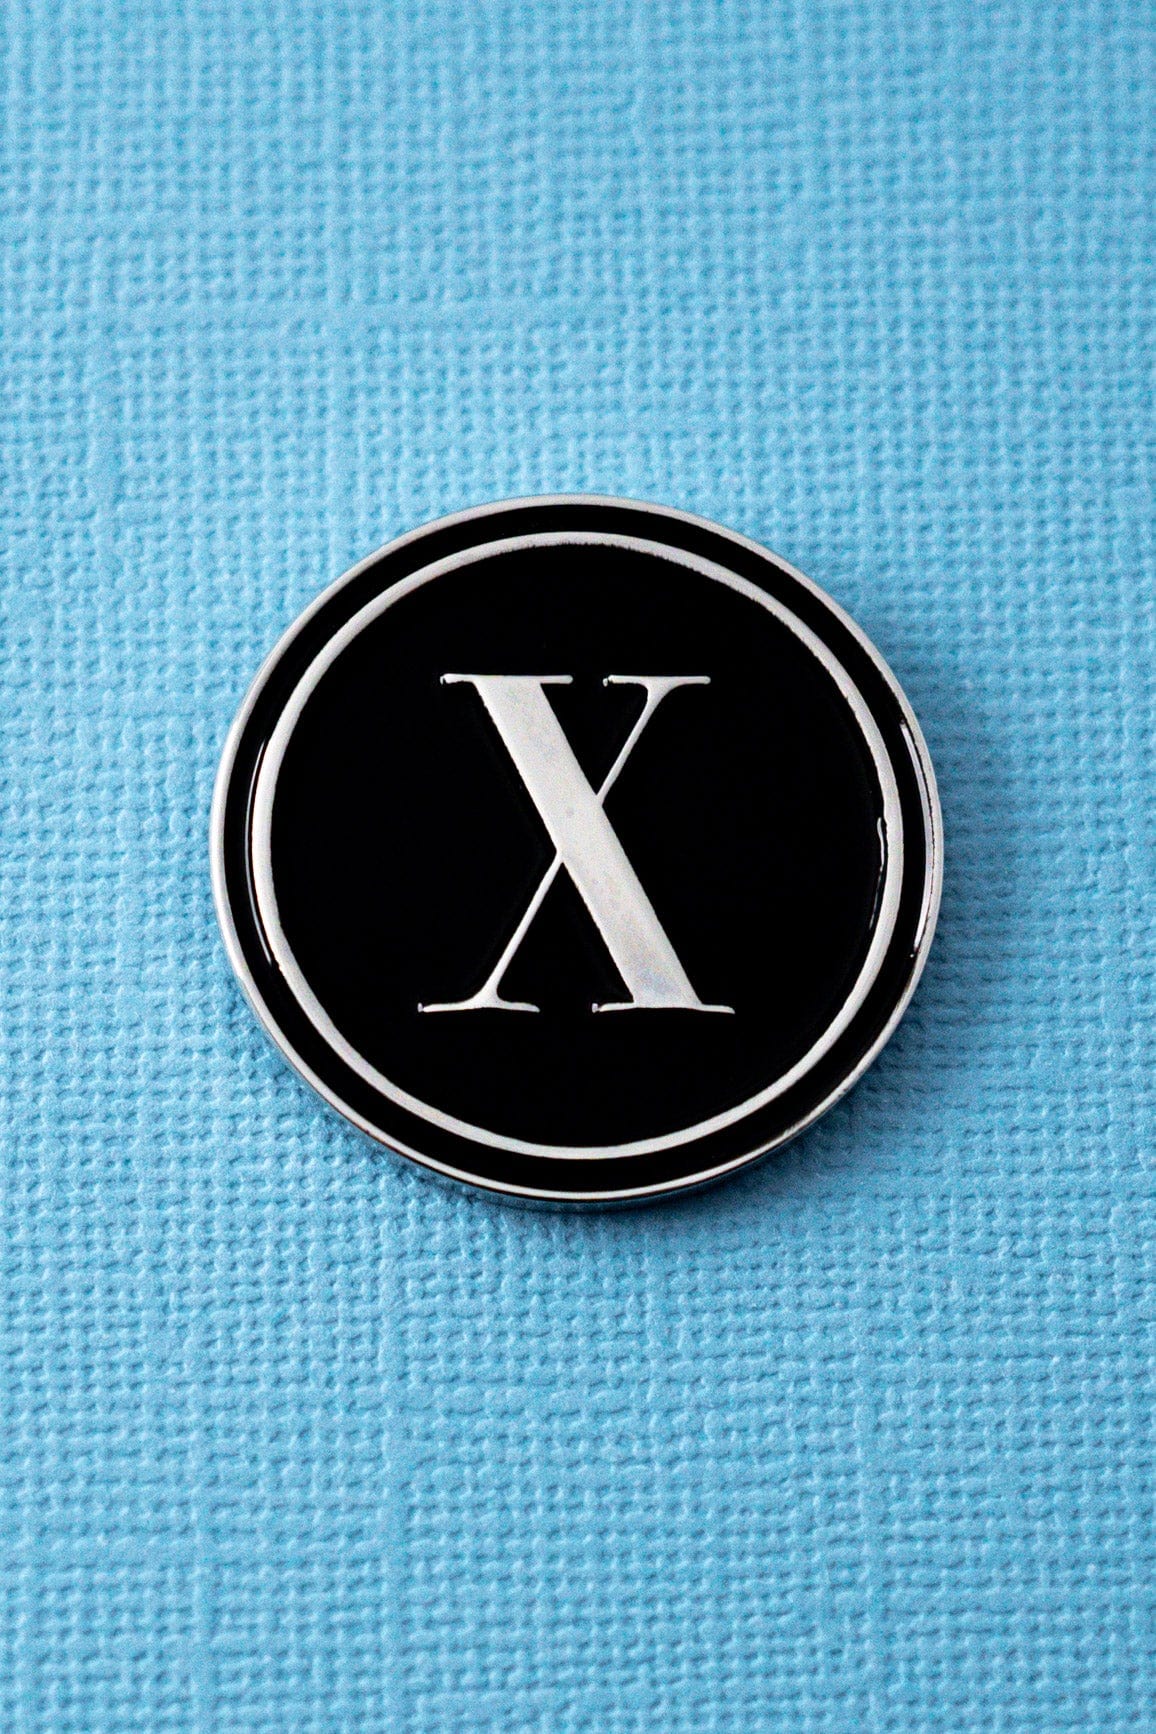 X Alphabet Enamel Pin ENAMEL PIN OS